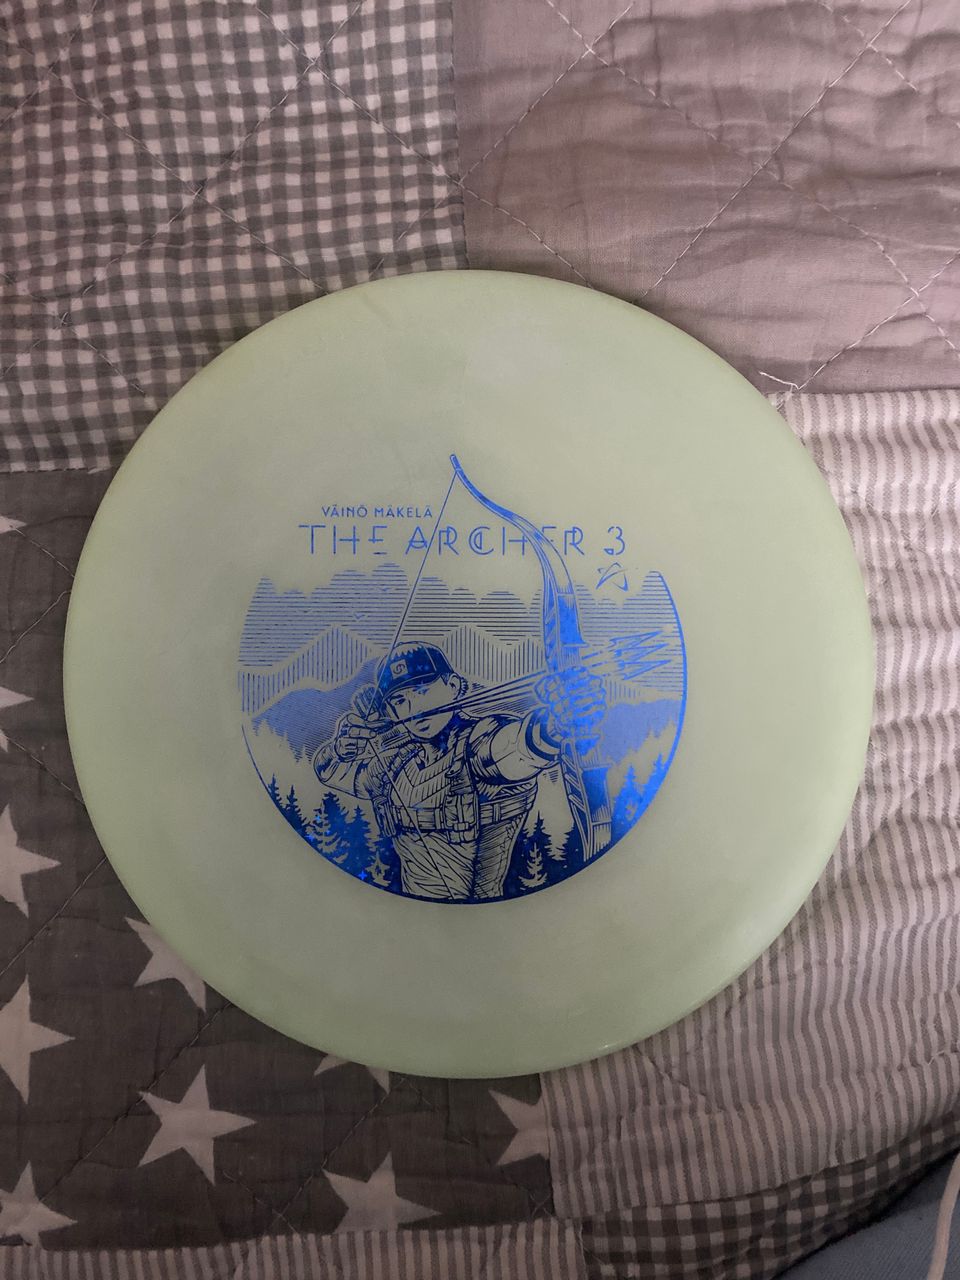 The Archer 3- frisbeegolfkiekko